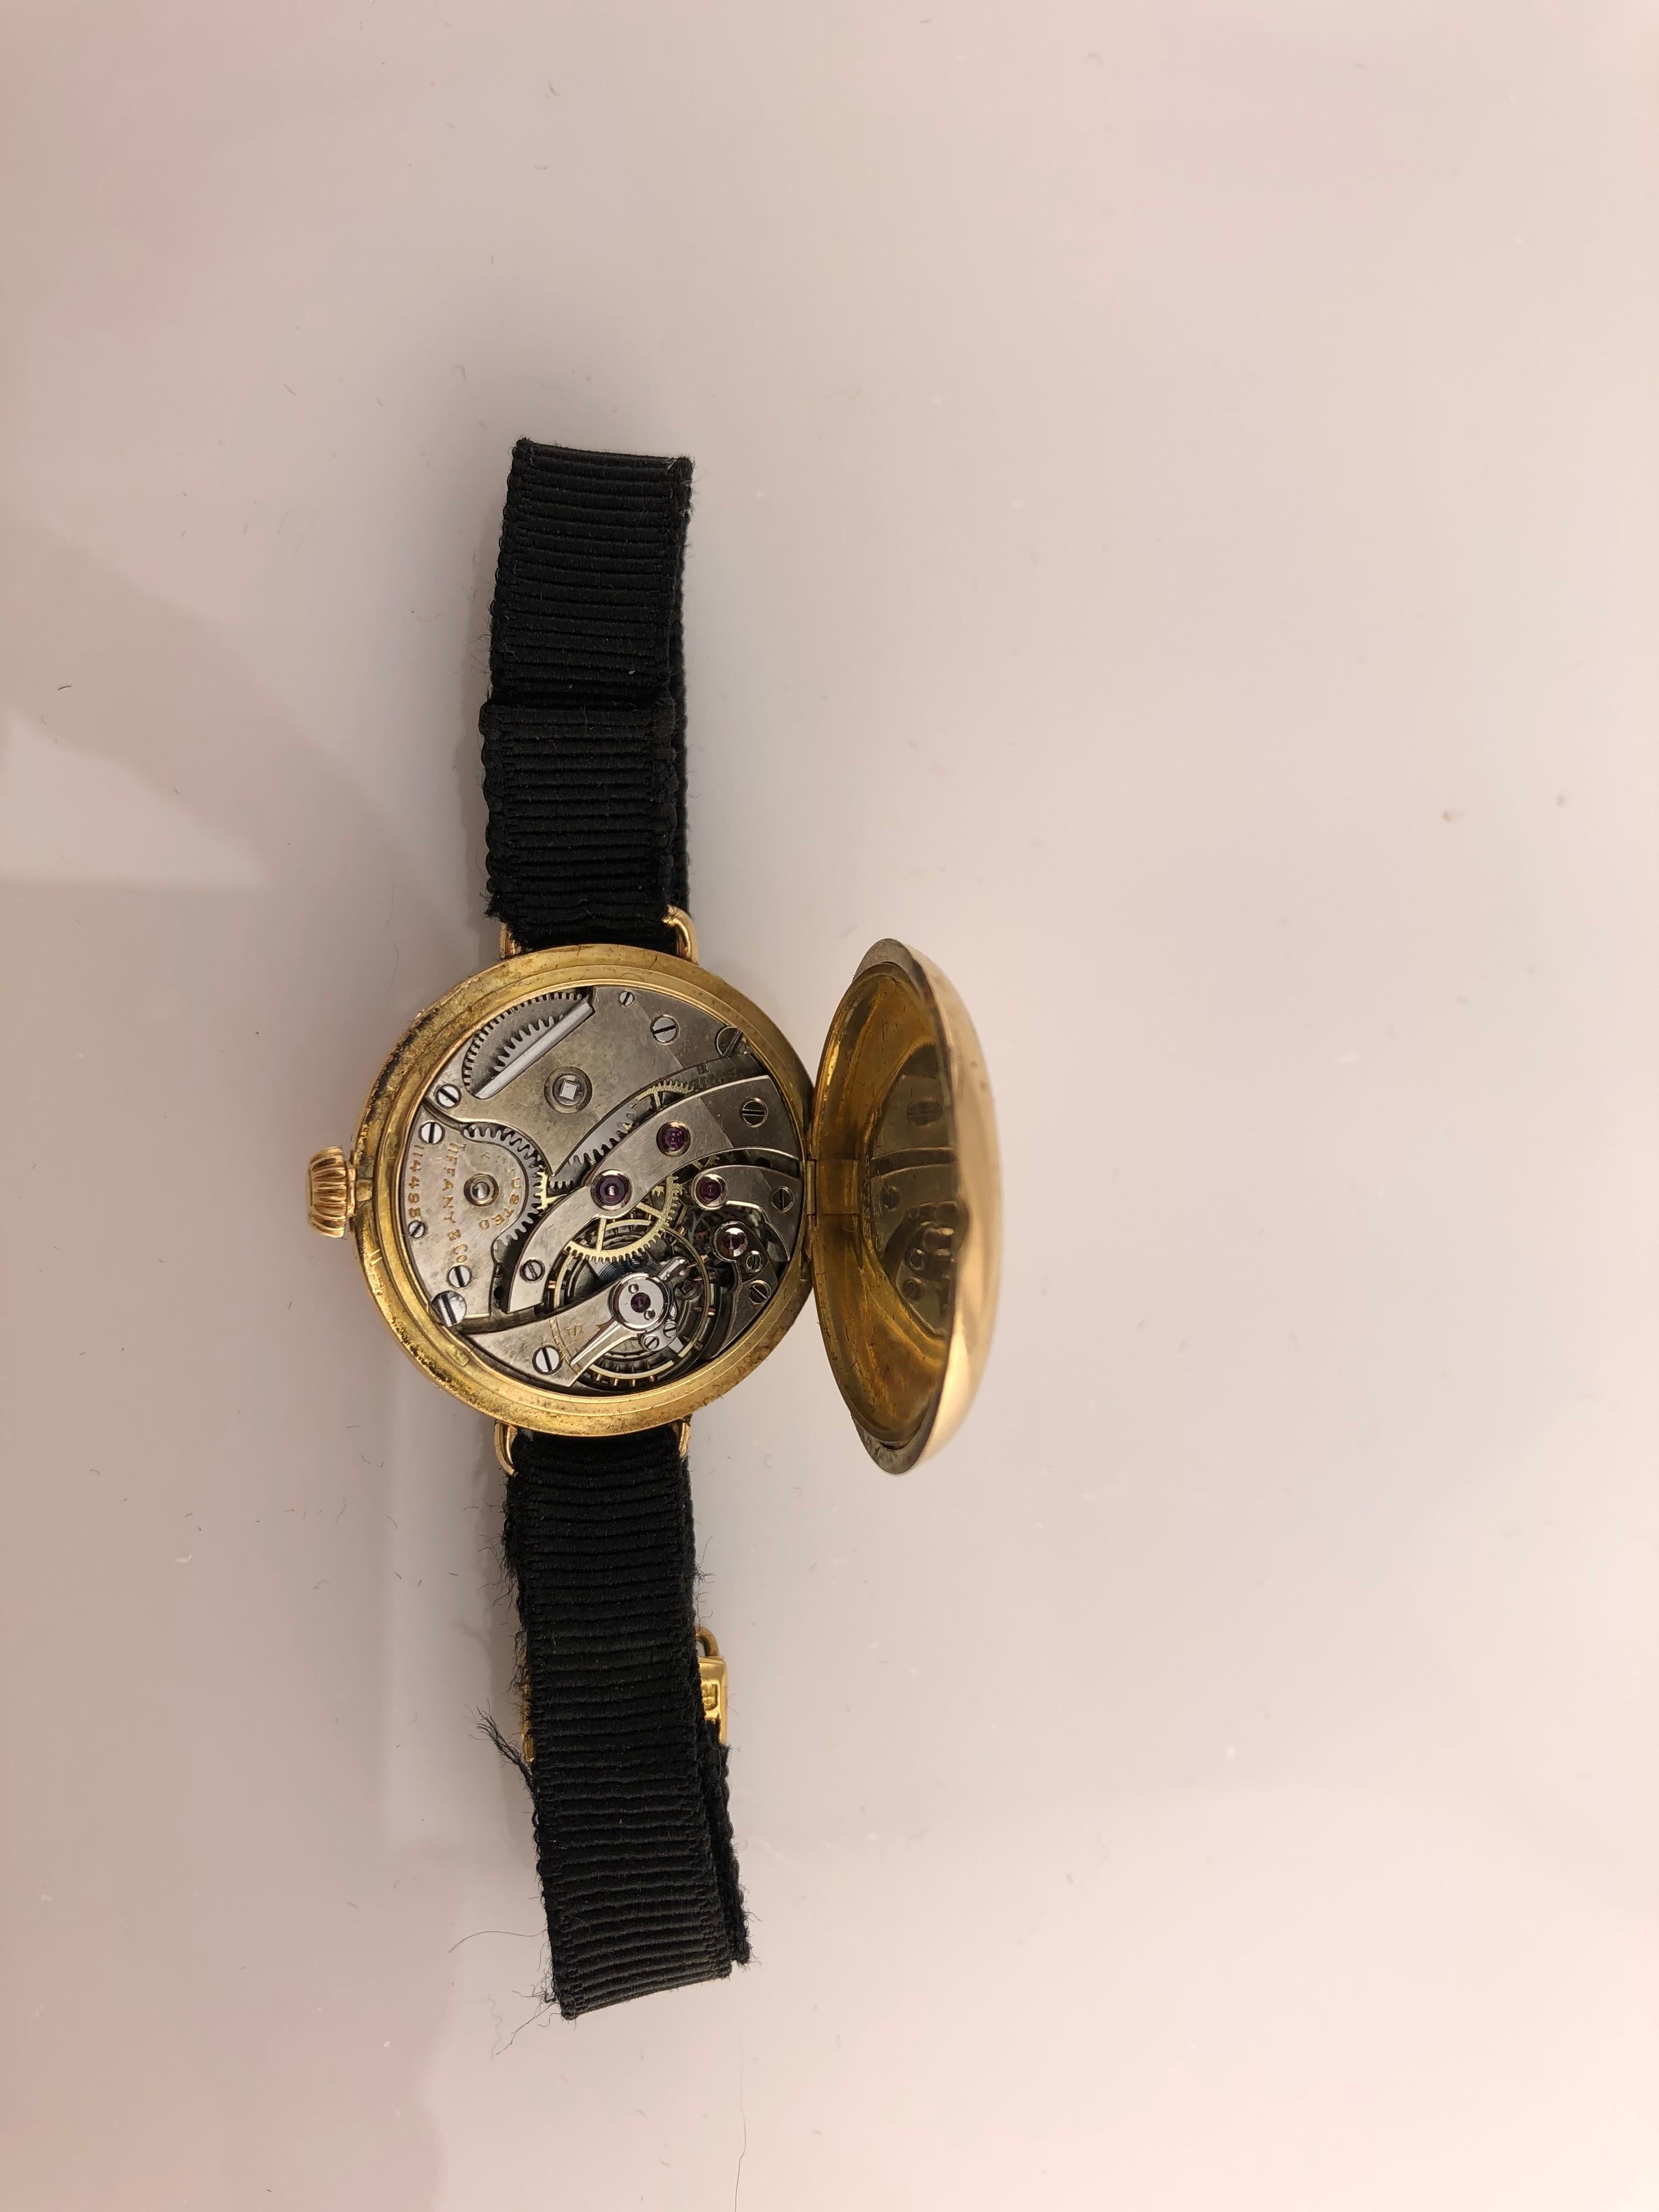 Tiffany & Co. 18 Karat Gold Ladies Wristwatch Hand Winding Pocket Watch Style 5